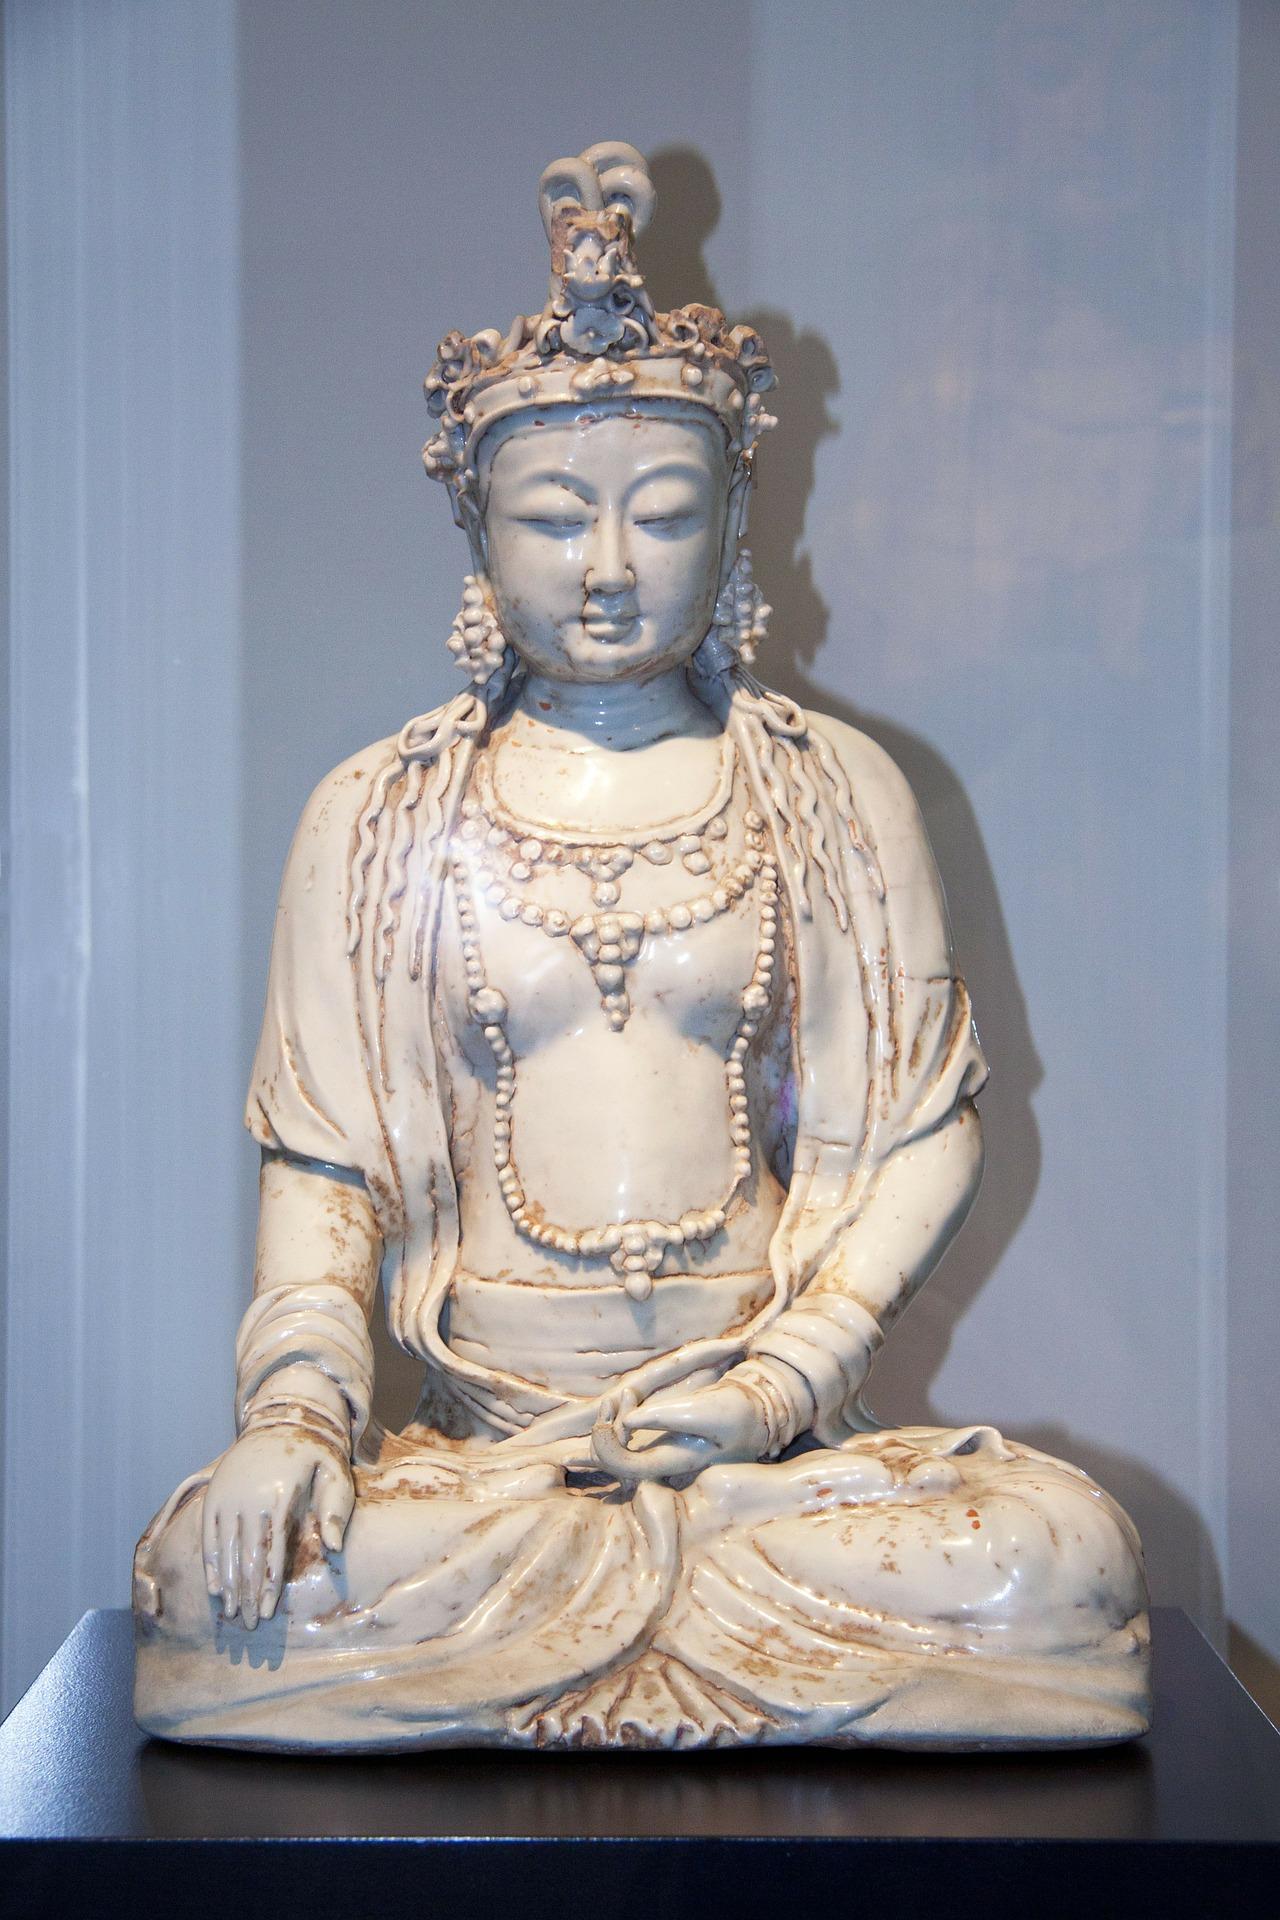 Free photo: Buddha Figure - religious, sculpture, object - Creative ...